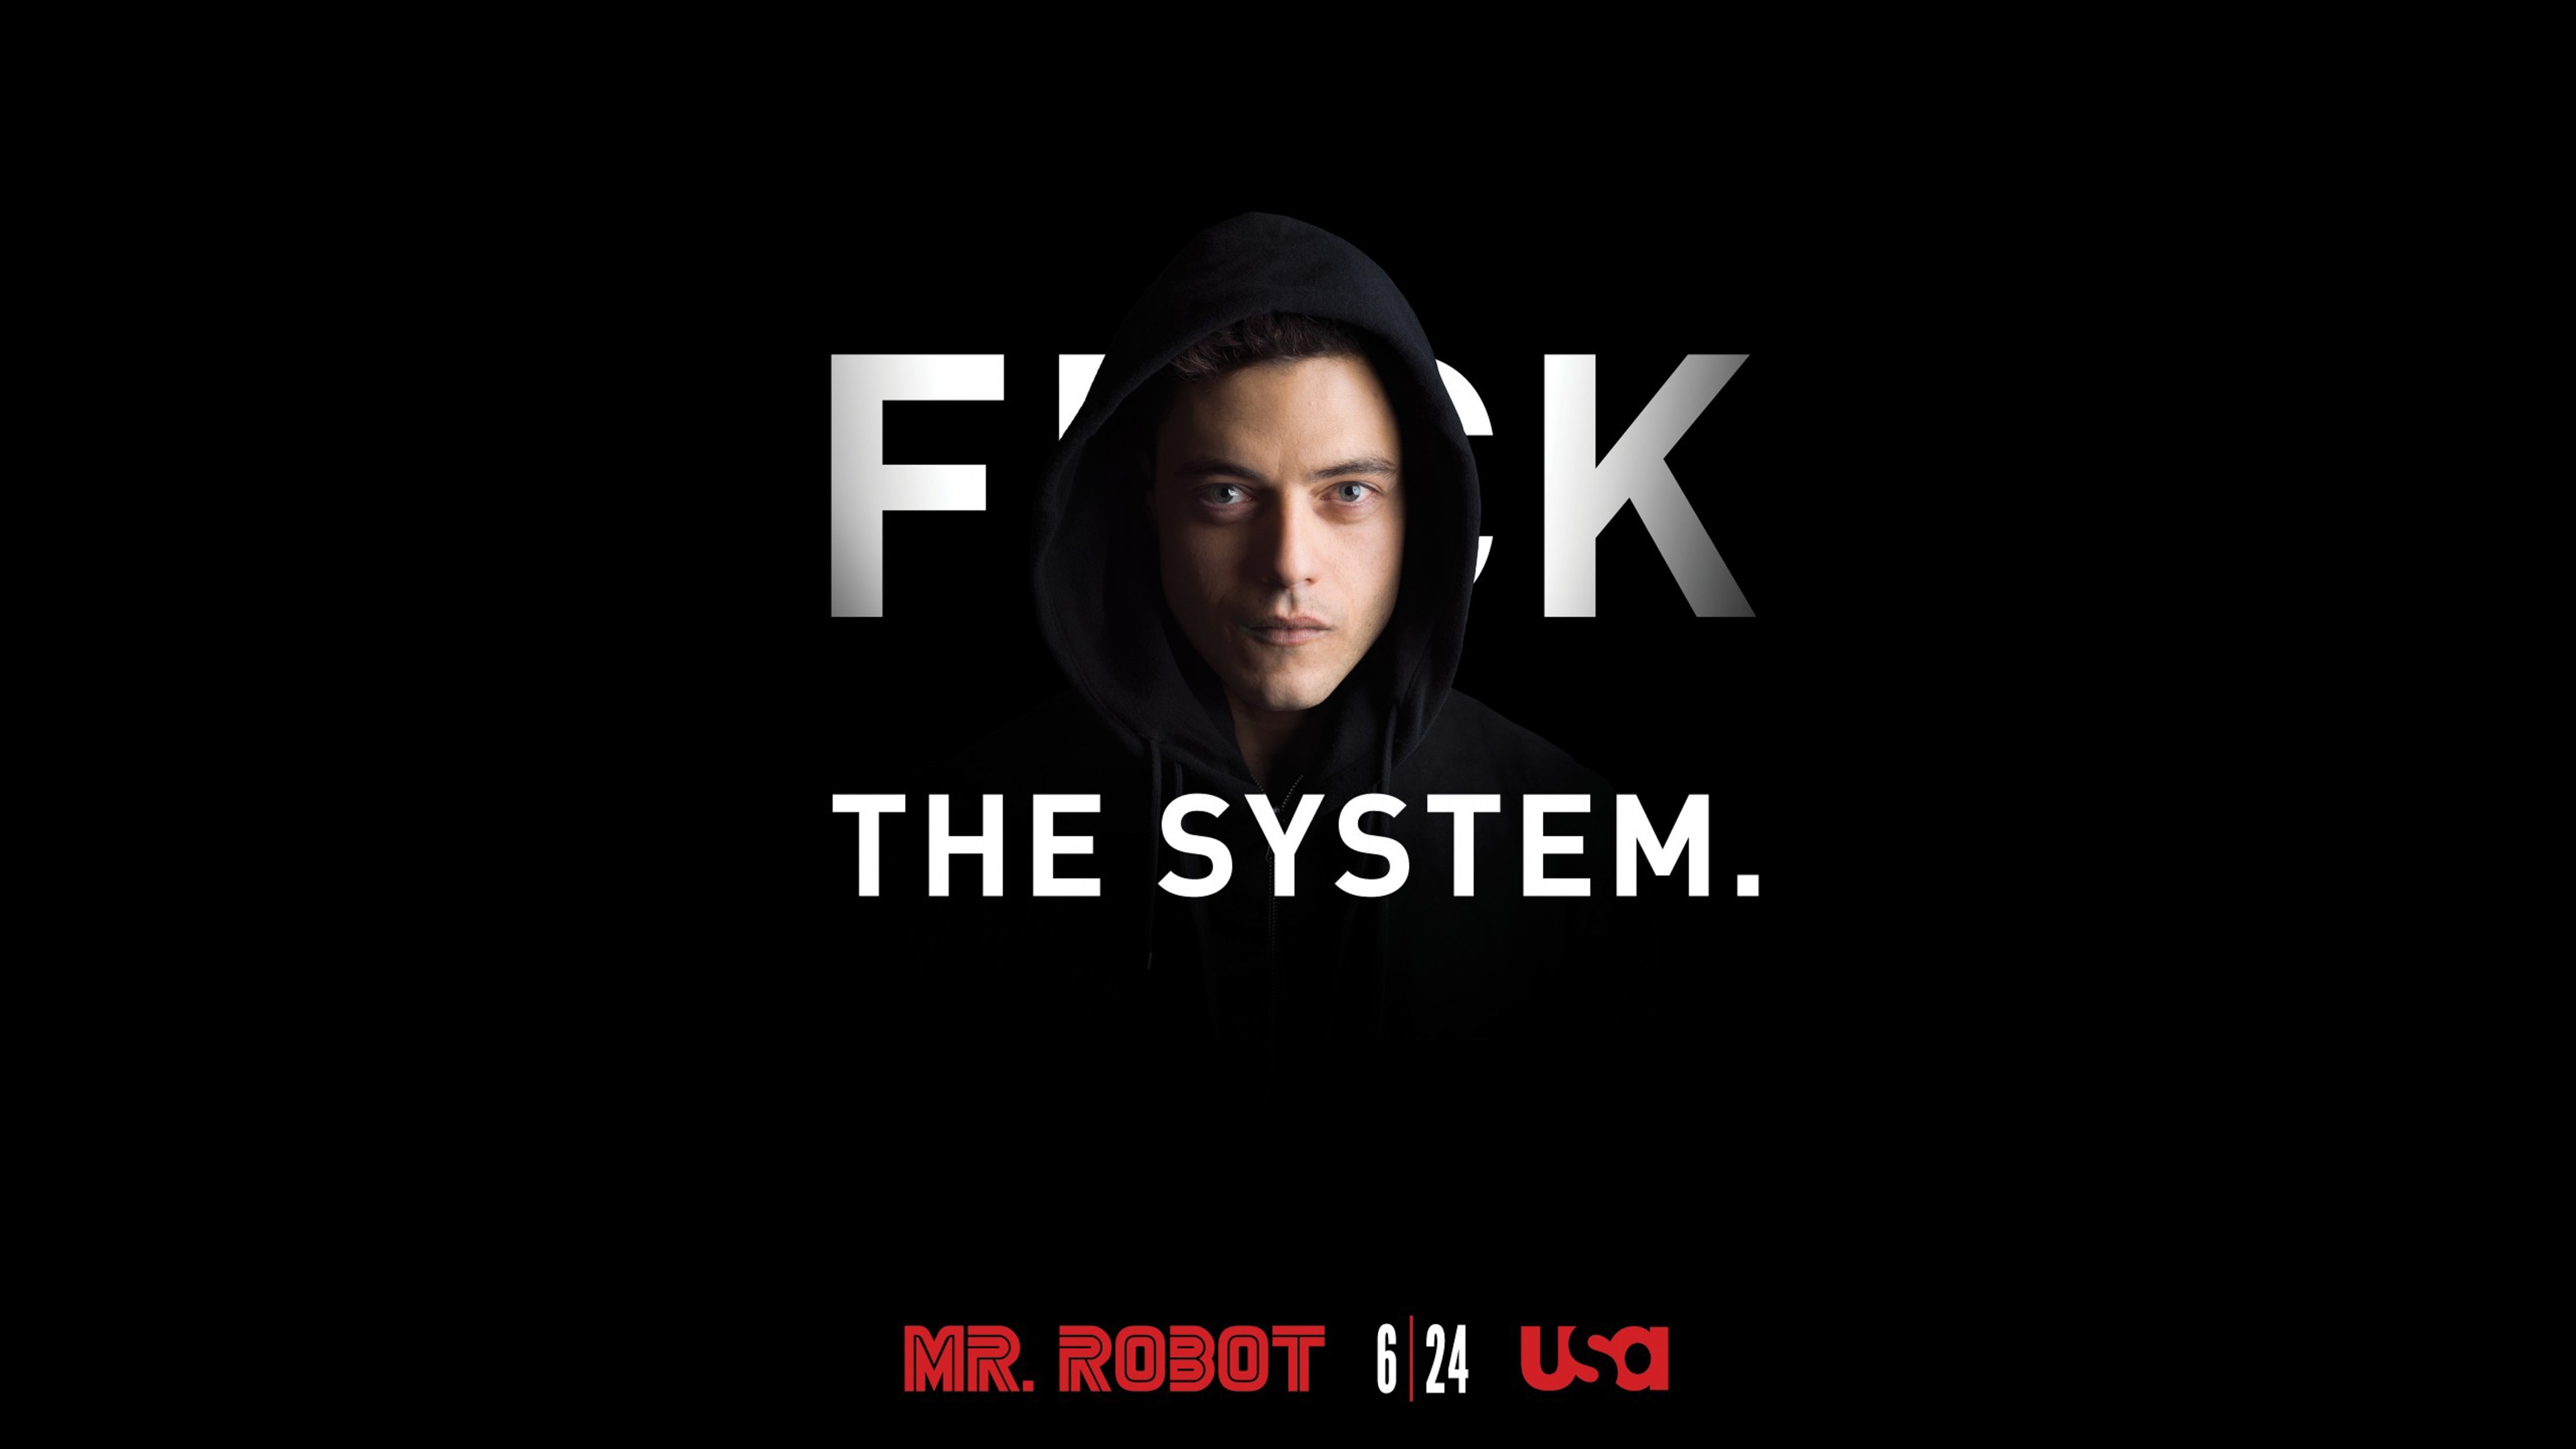 Mr Robot Season 2 for 3840 x 2160 Ultra HD resolution